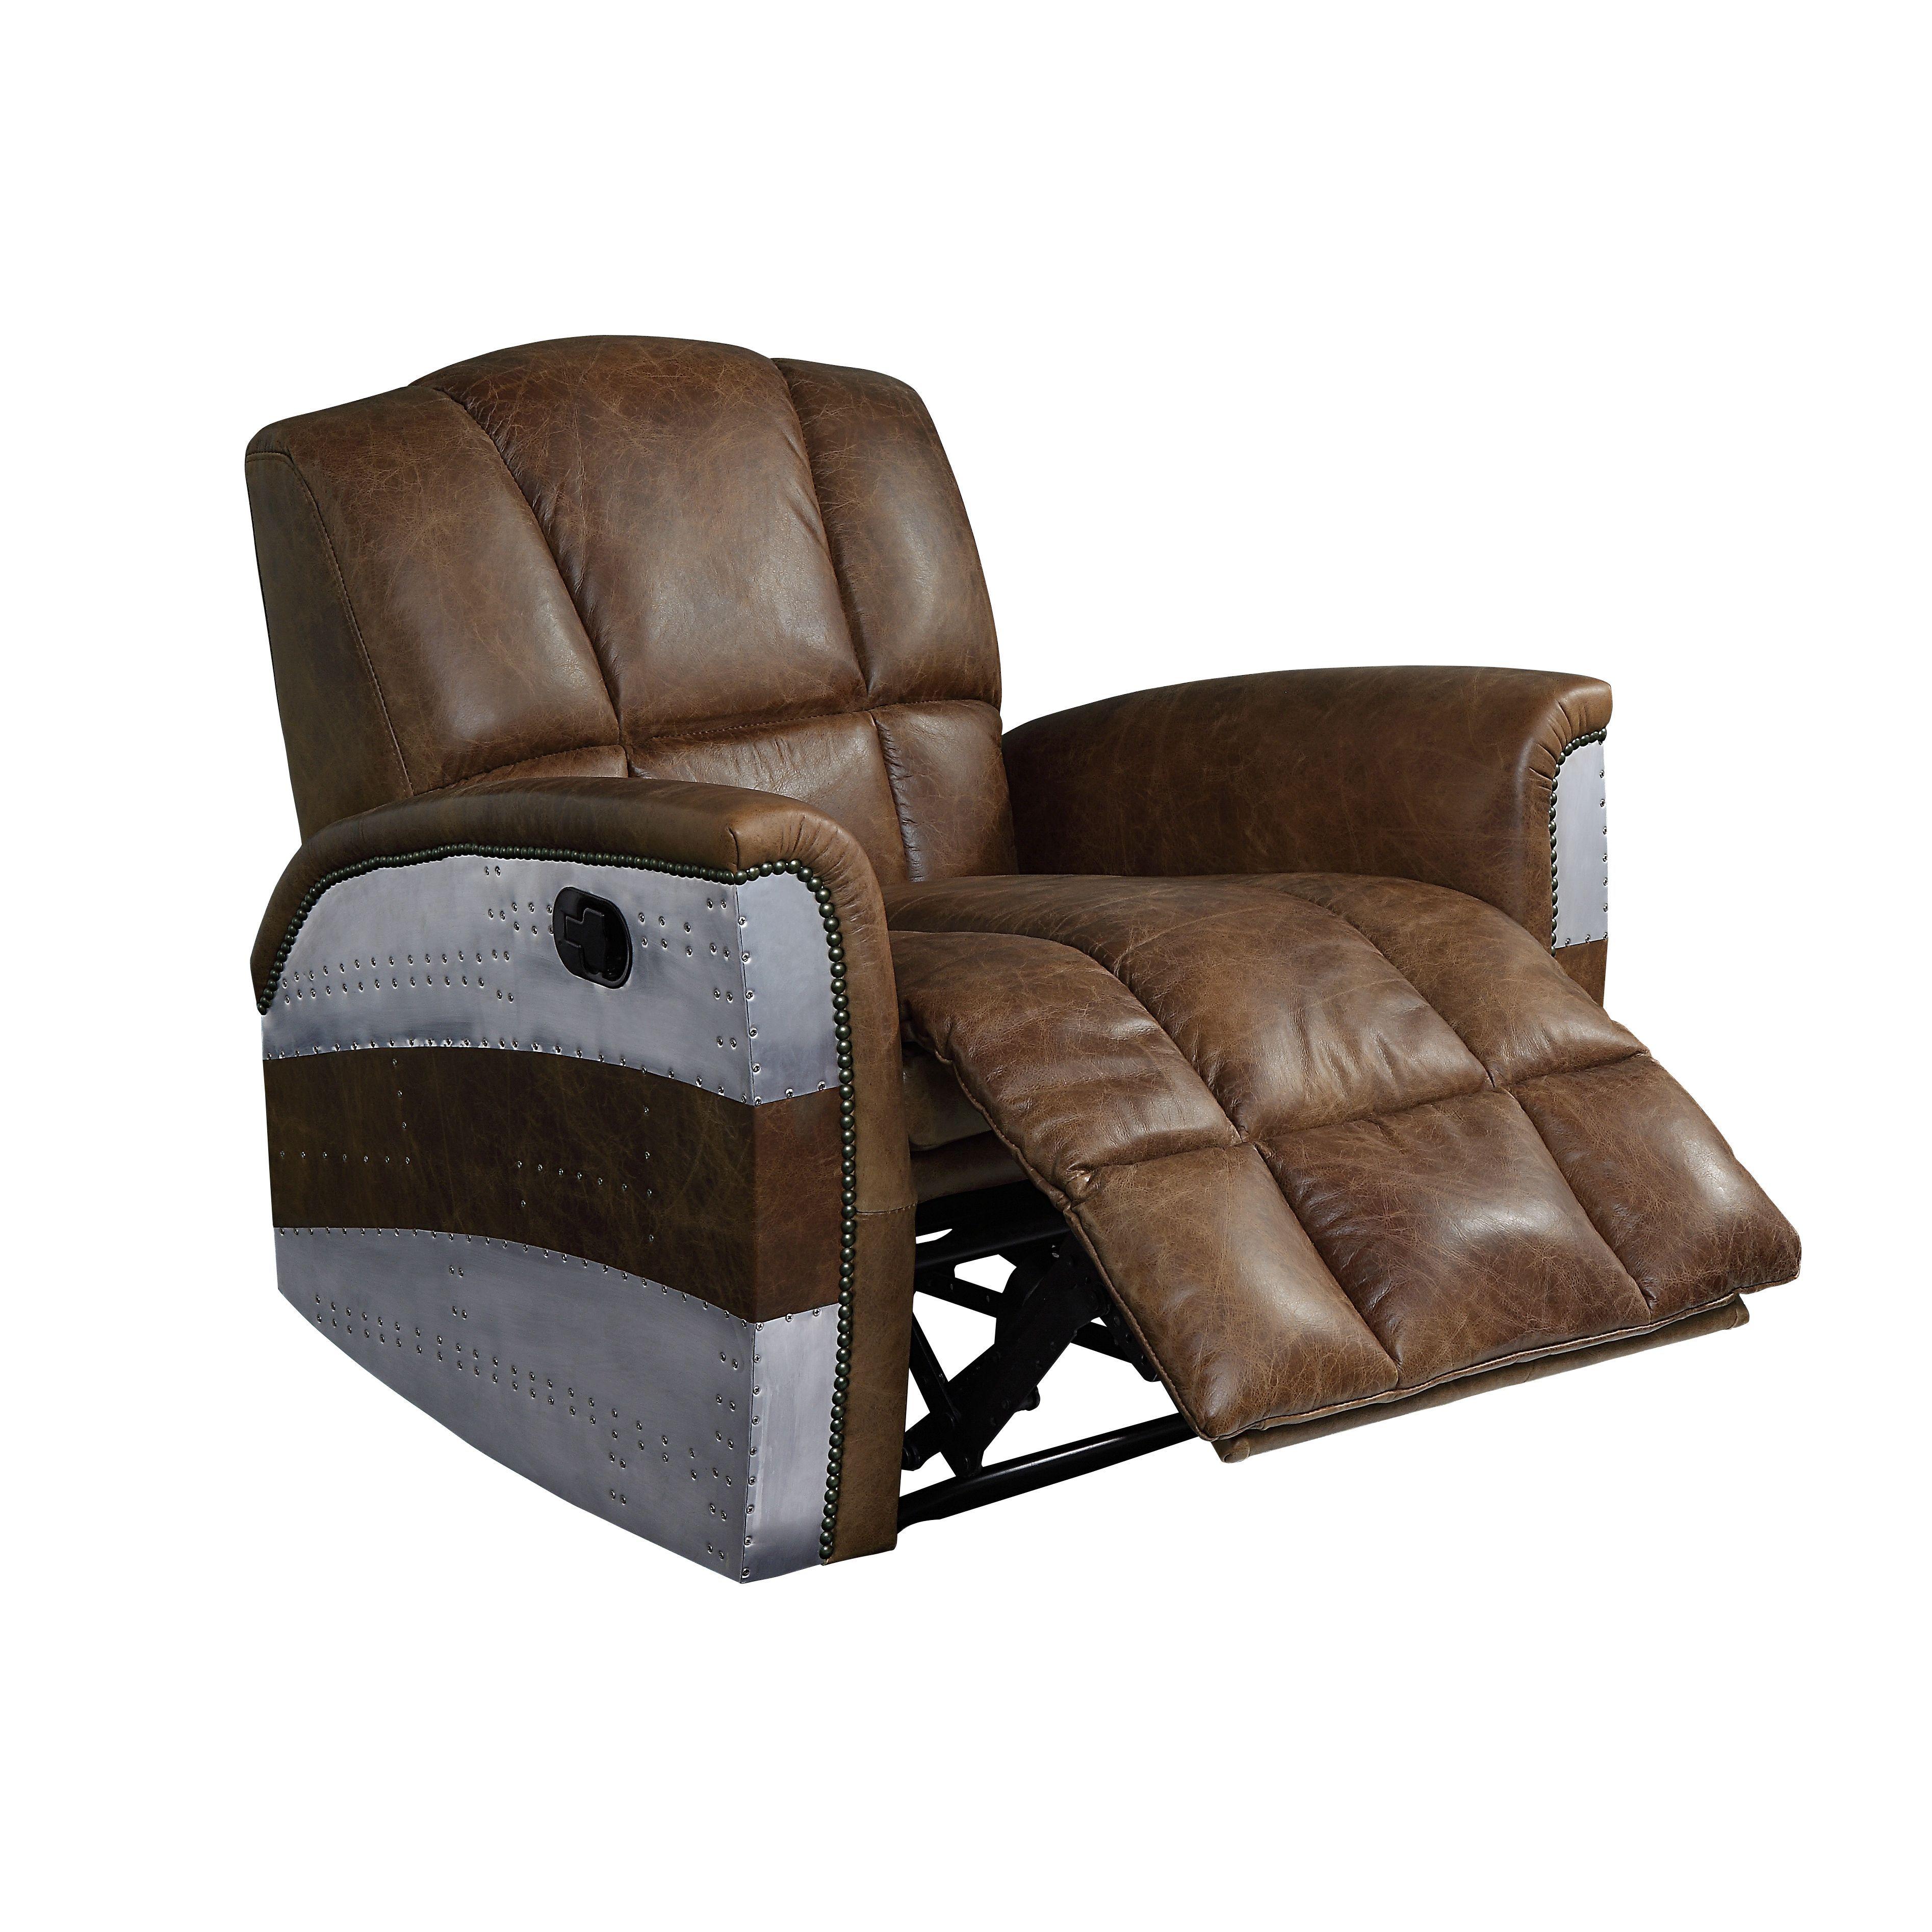 Modern Power recliner Brancaster Power Recliner 59718-R 59718-R in Brown Top grain leather